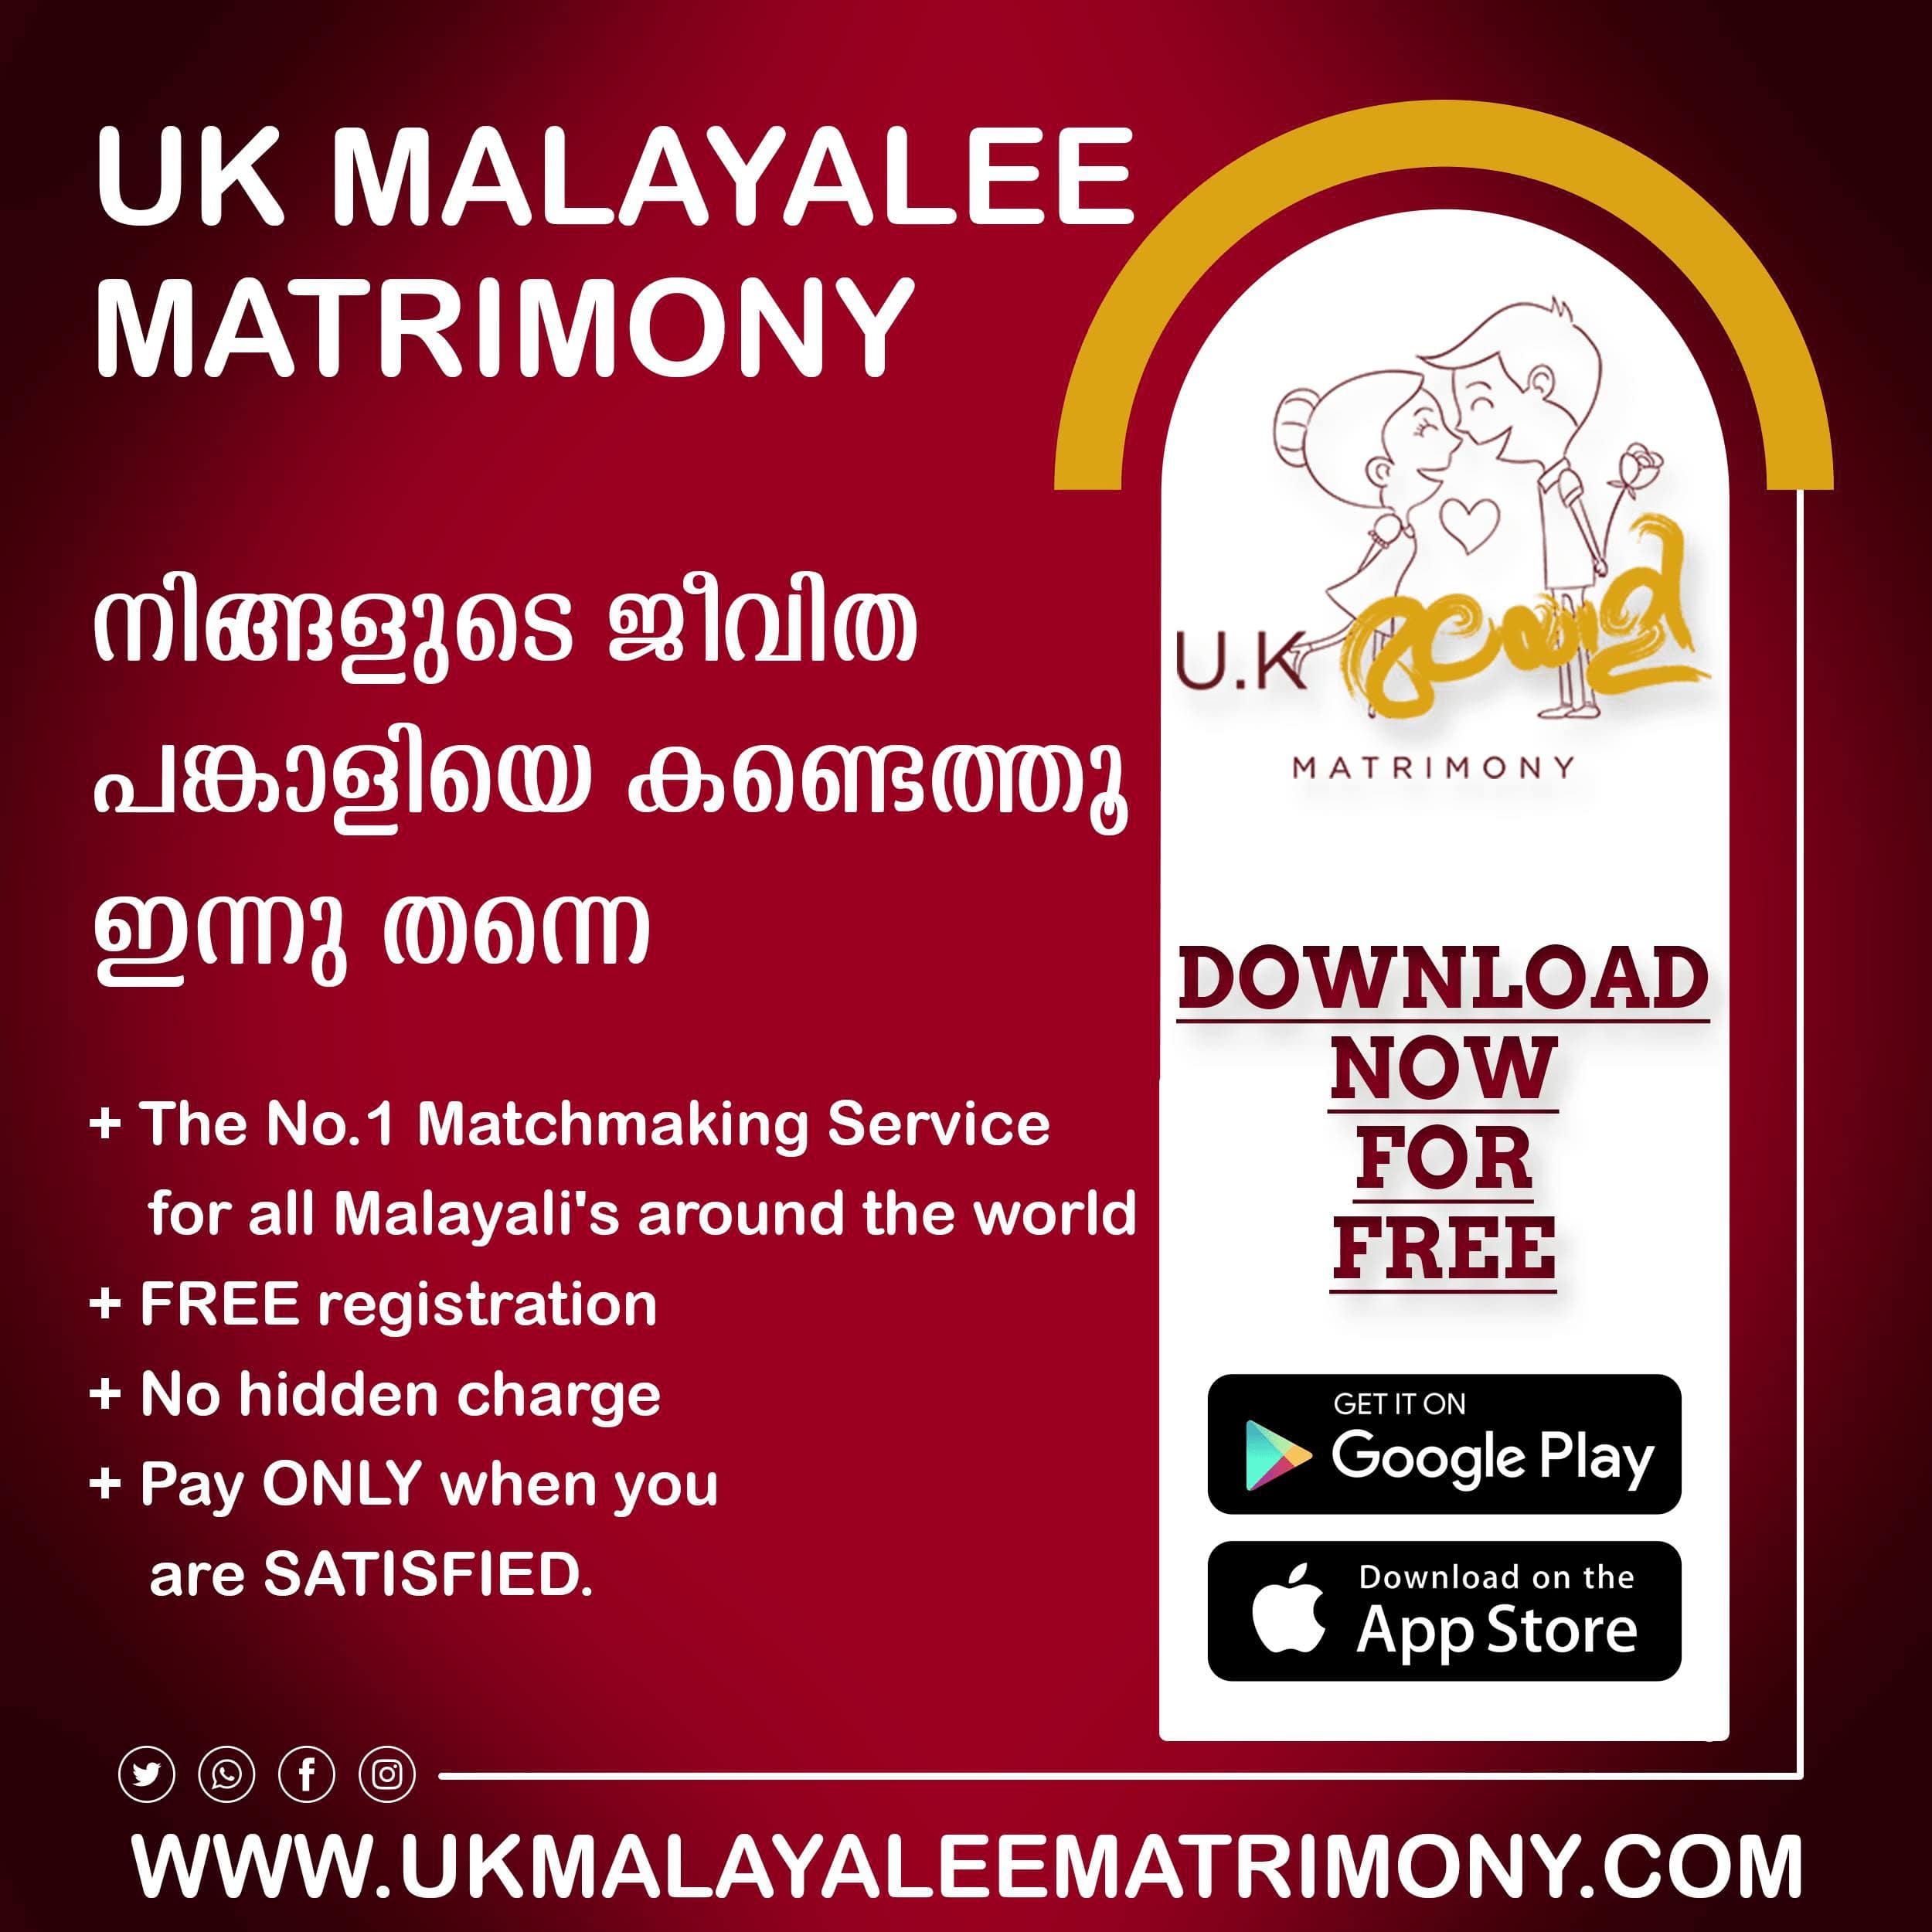 Register now for free with Gulf Malayali Matrimony